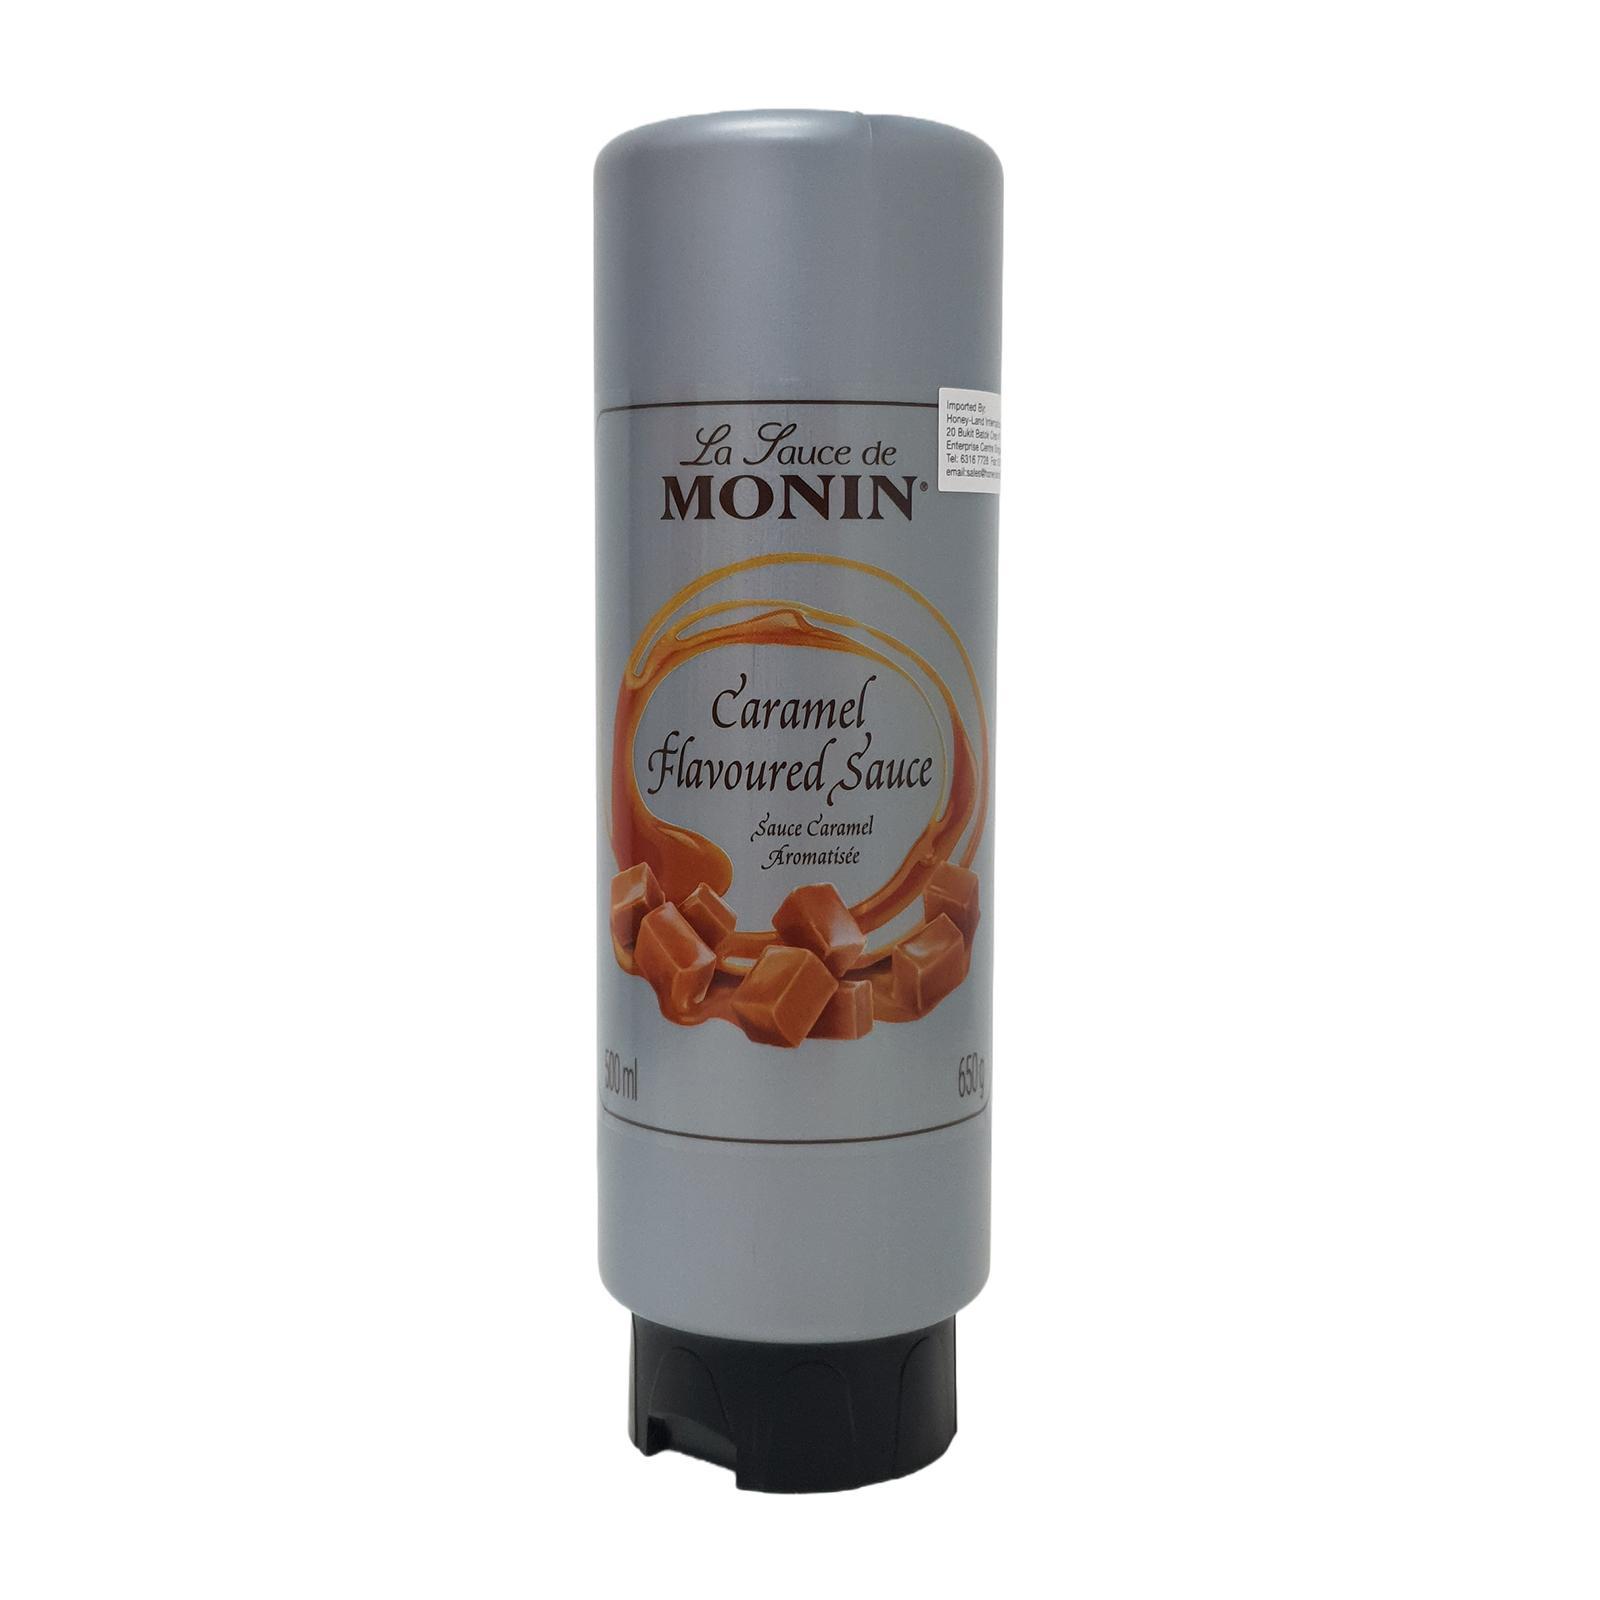 Monin Vanille 700 ml + sauce Caramel Monin 500 ml + pompe à sirop